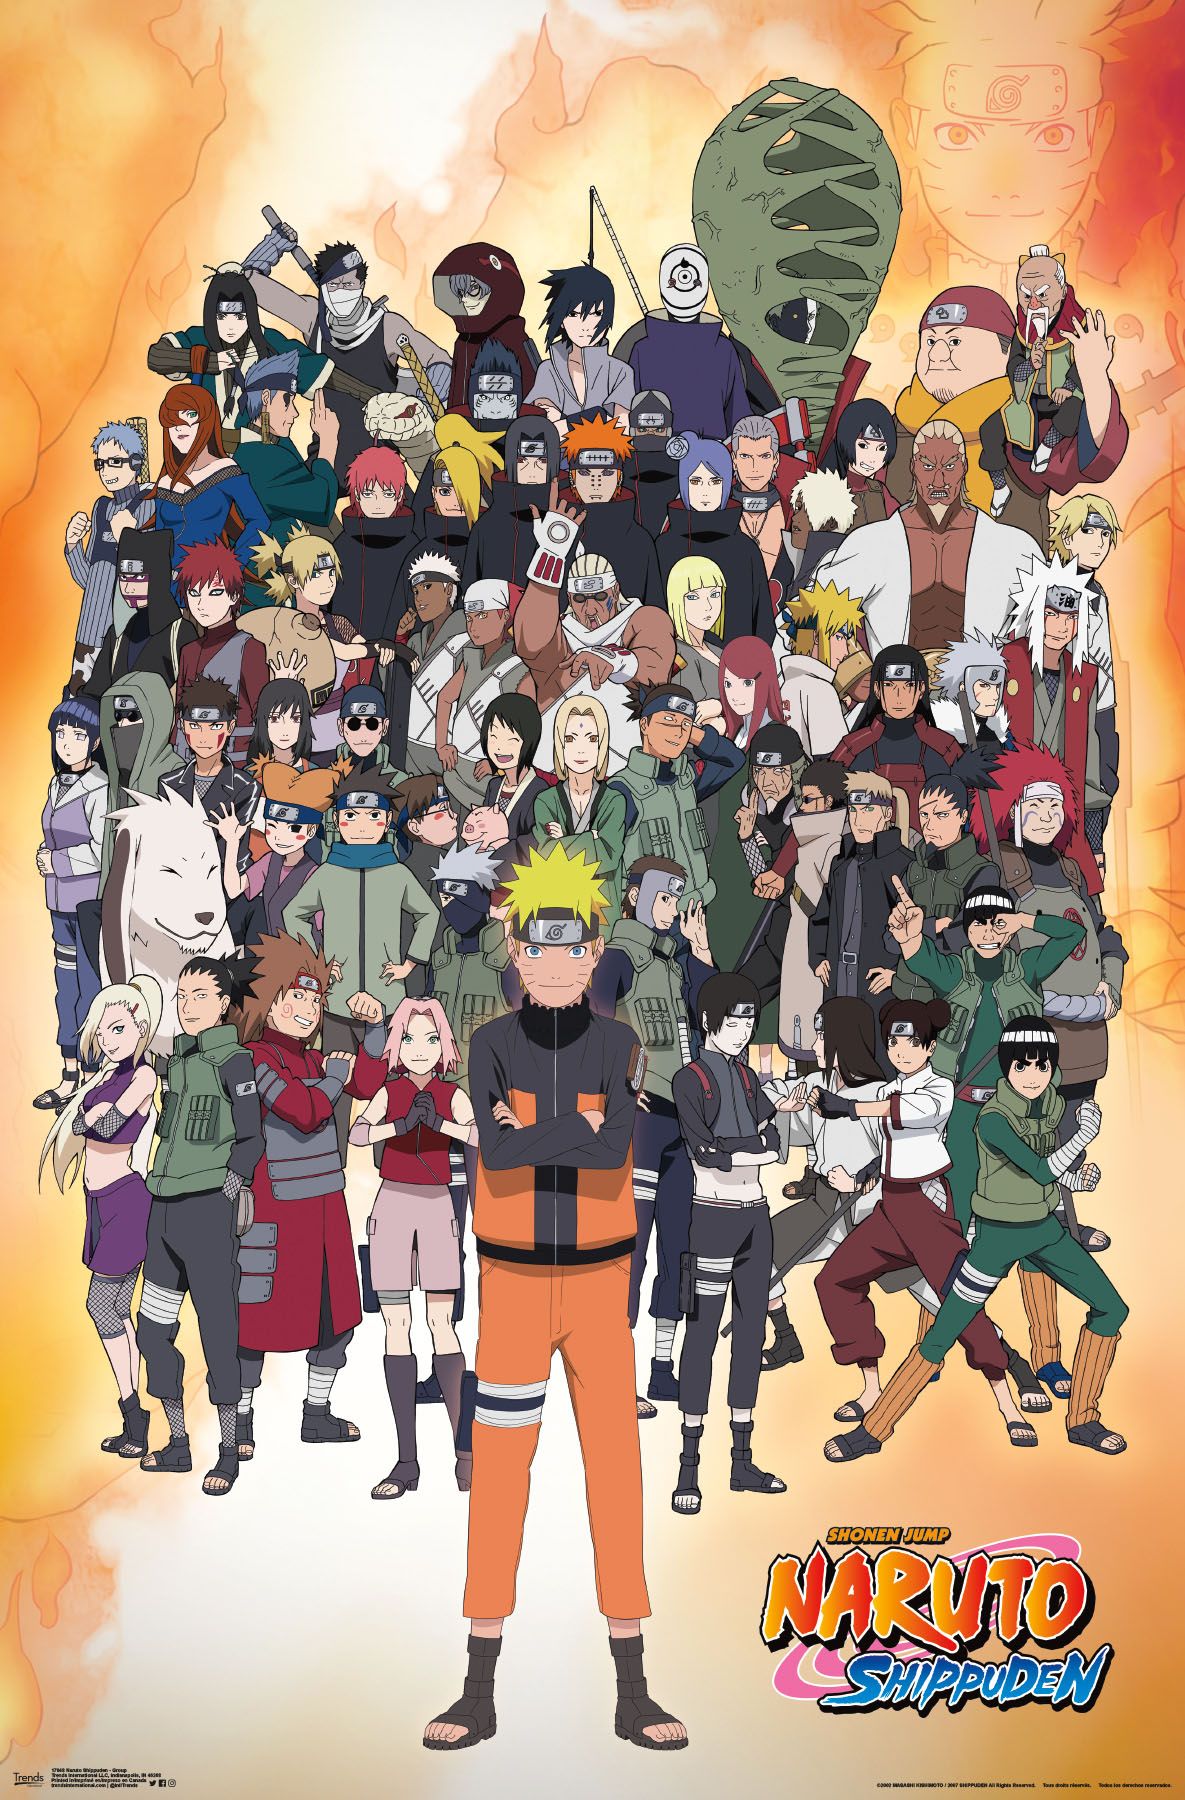 Trends International Naruto TV / Movies / Games Poster.com. Naruto, Anime, Anime naruto